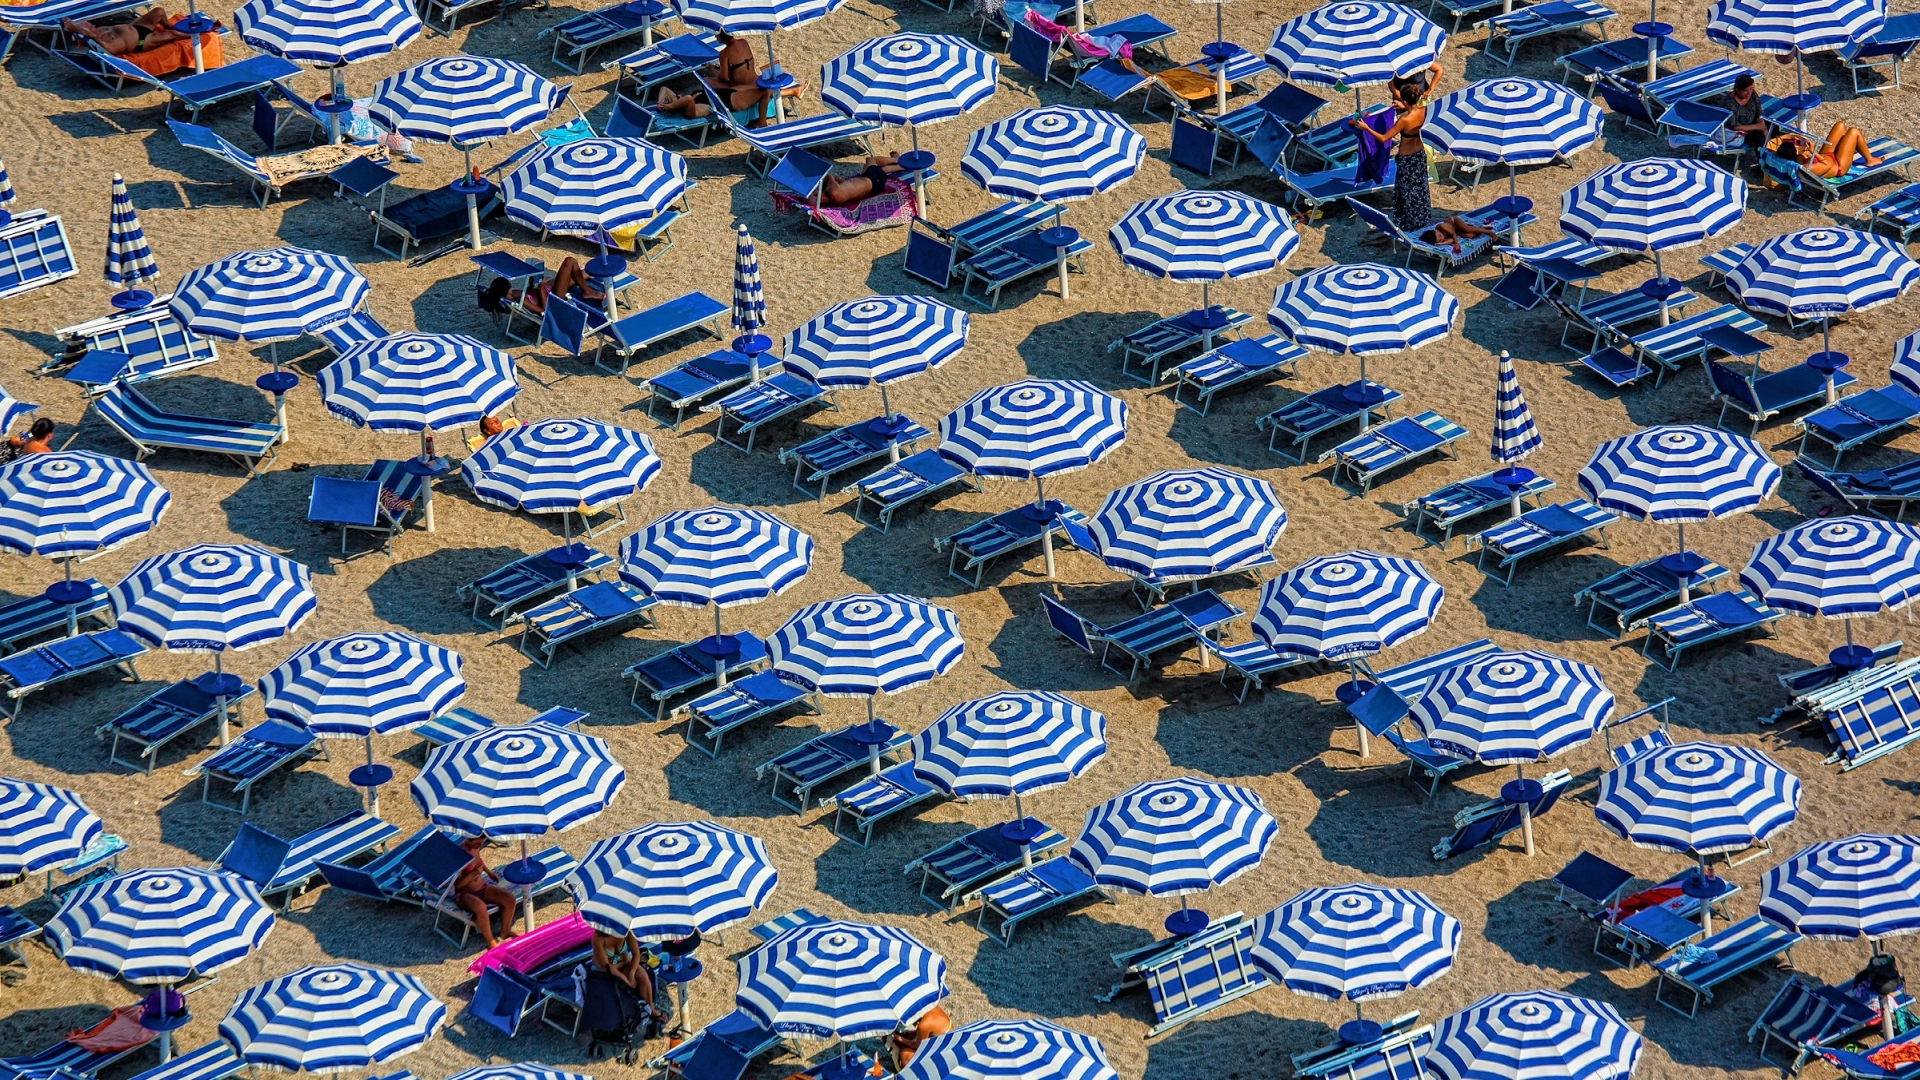 Greece Beach - Sunbeds, Umbrellas